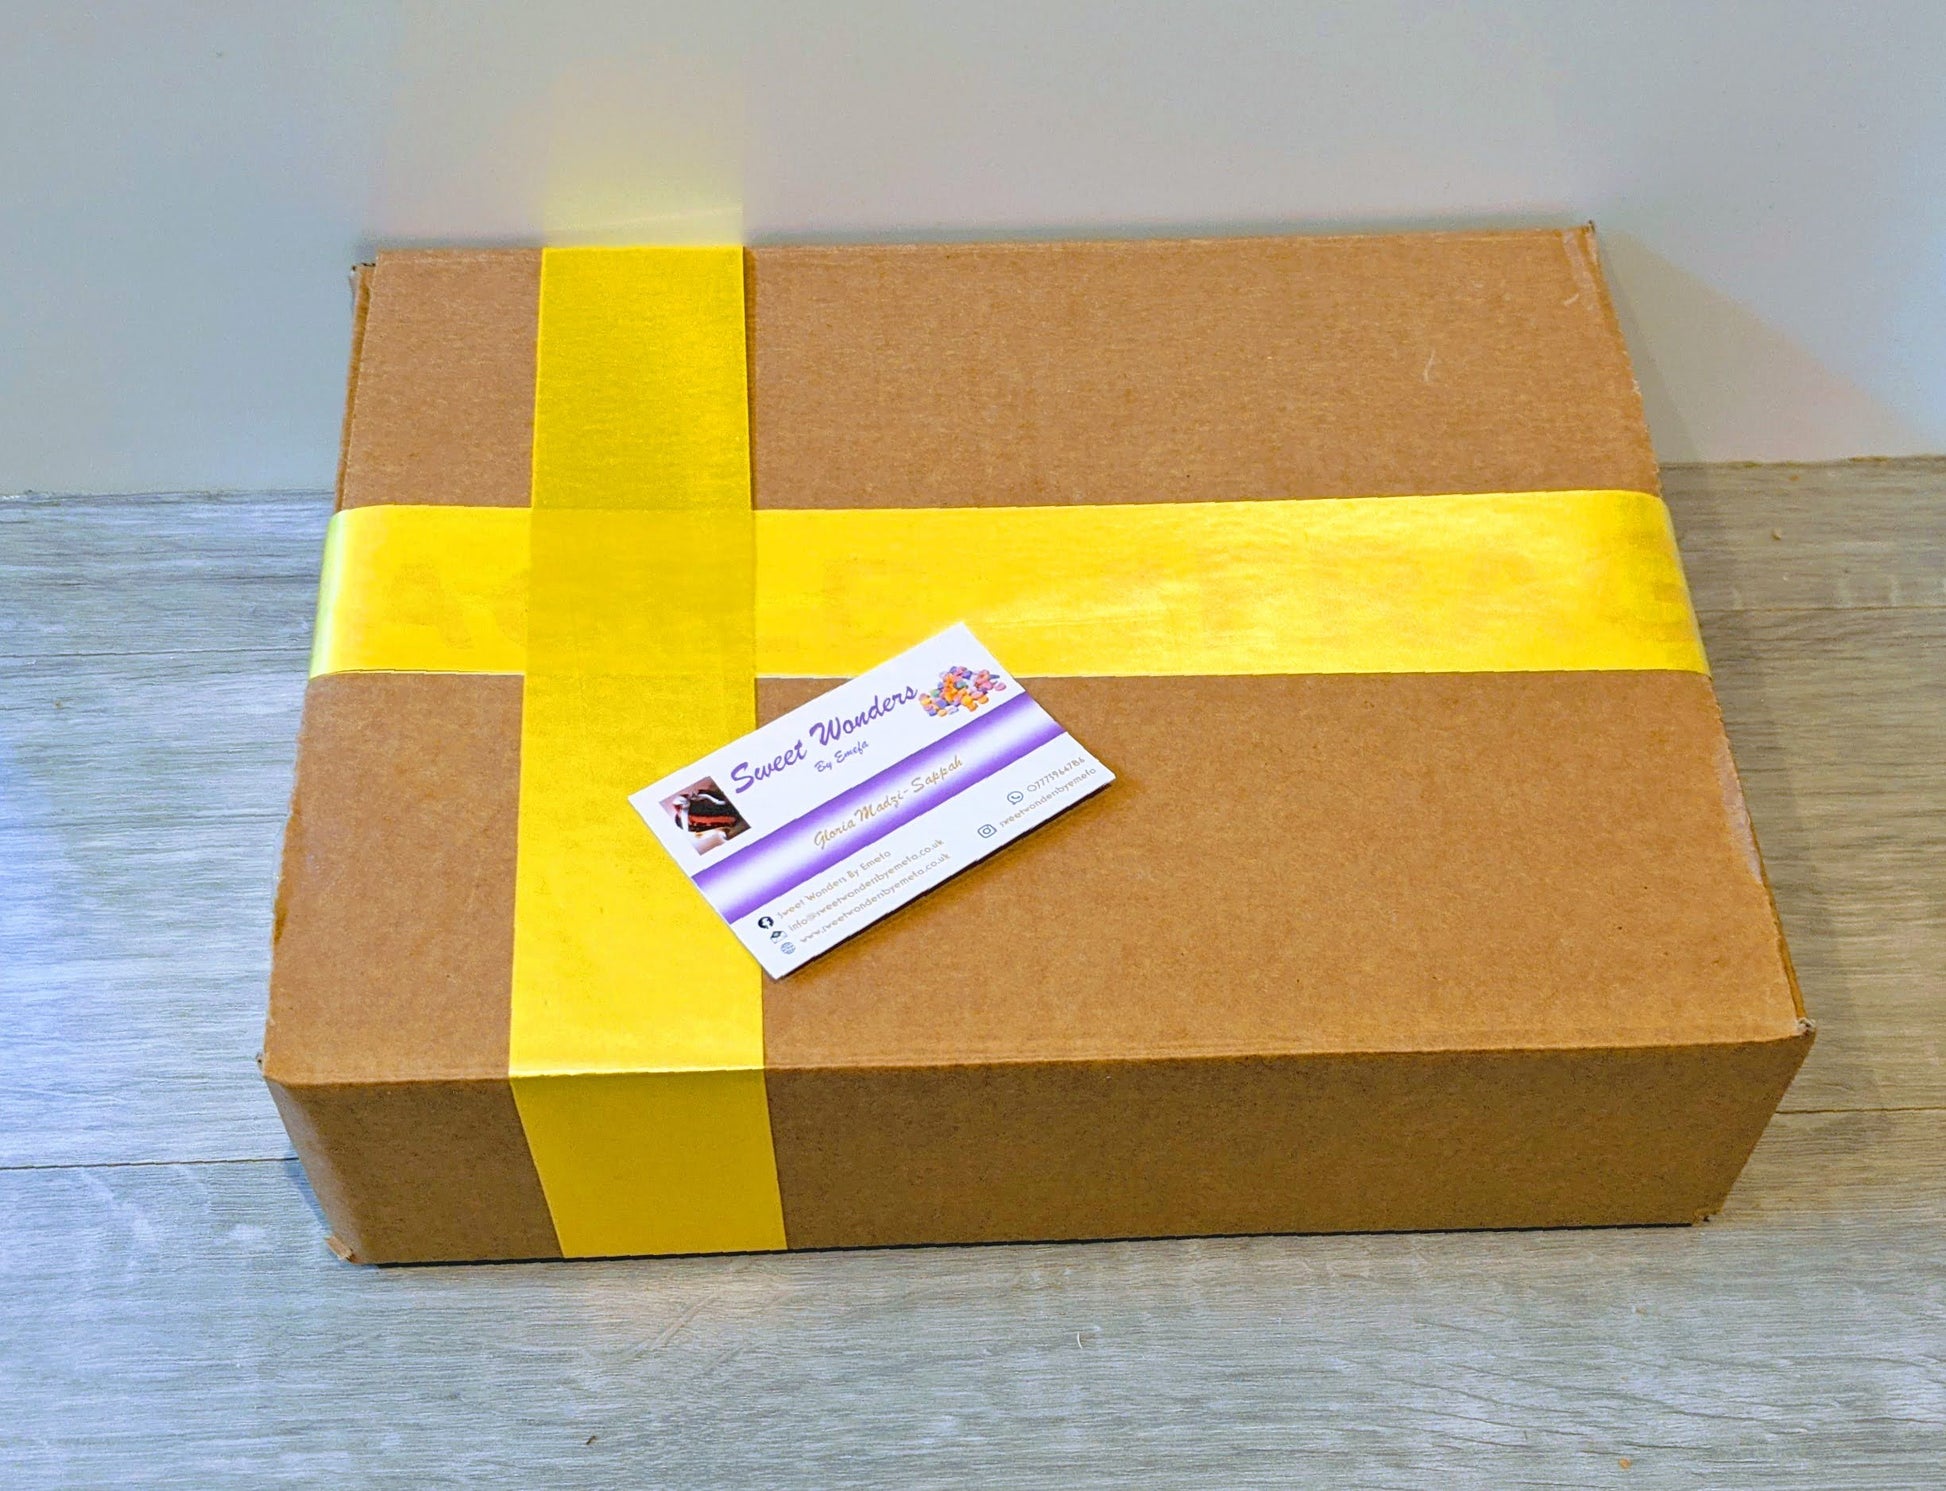 Premium Retro Sweet Box at your doorstep delivery in UK